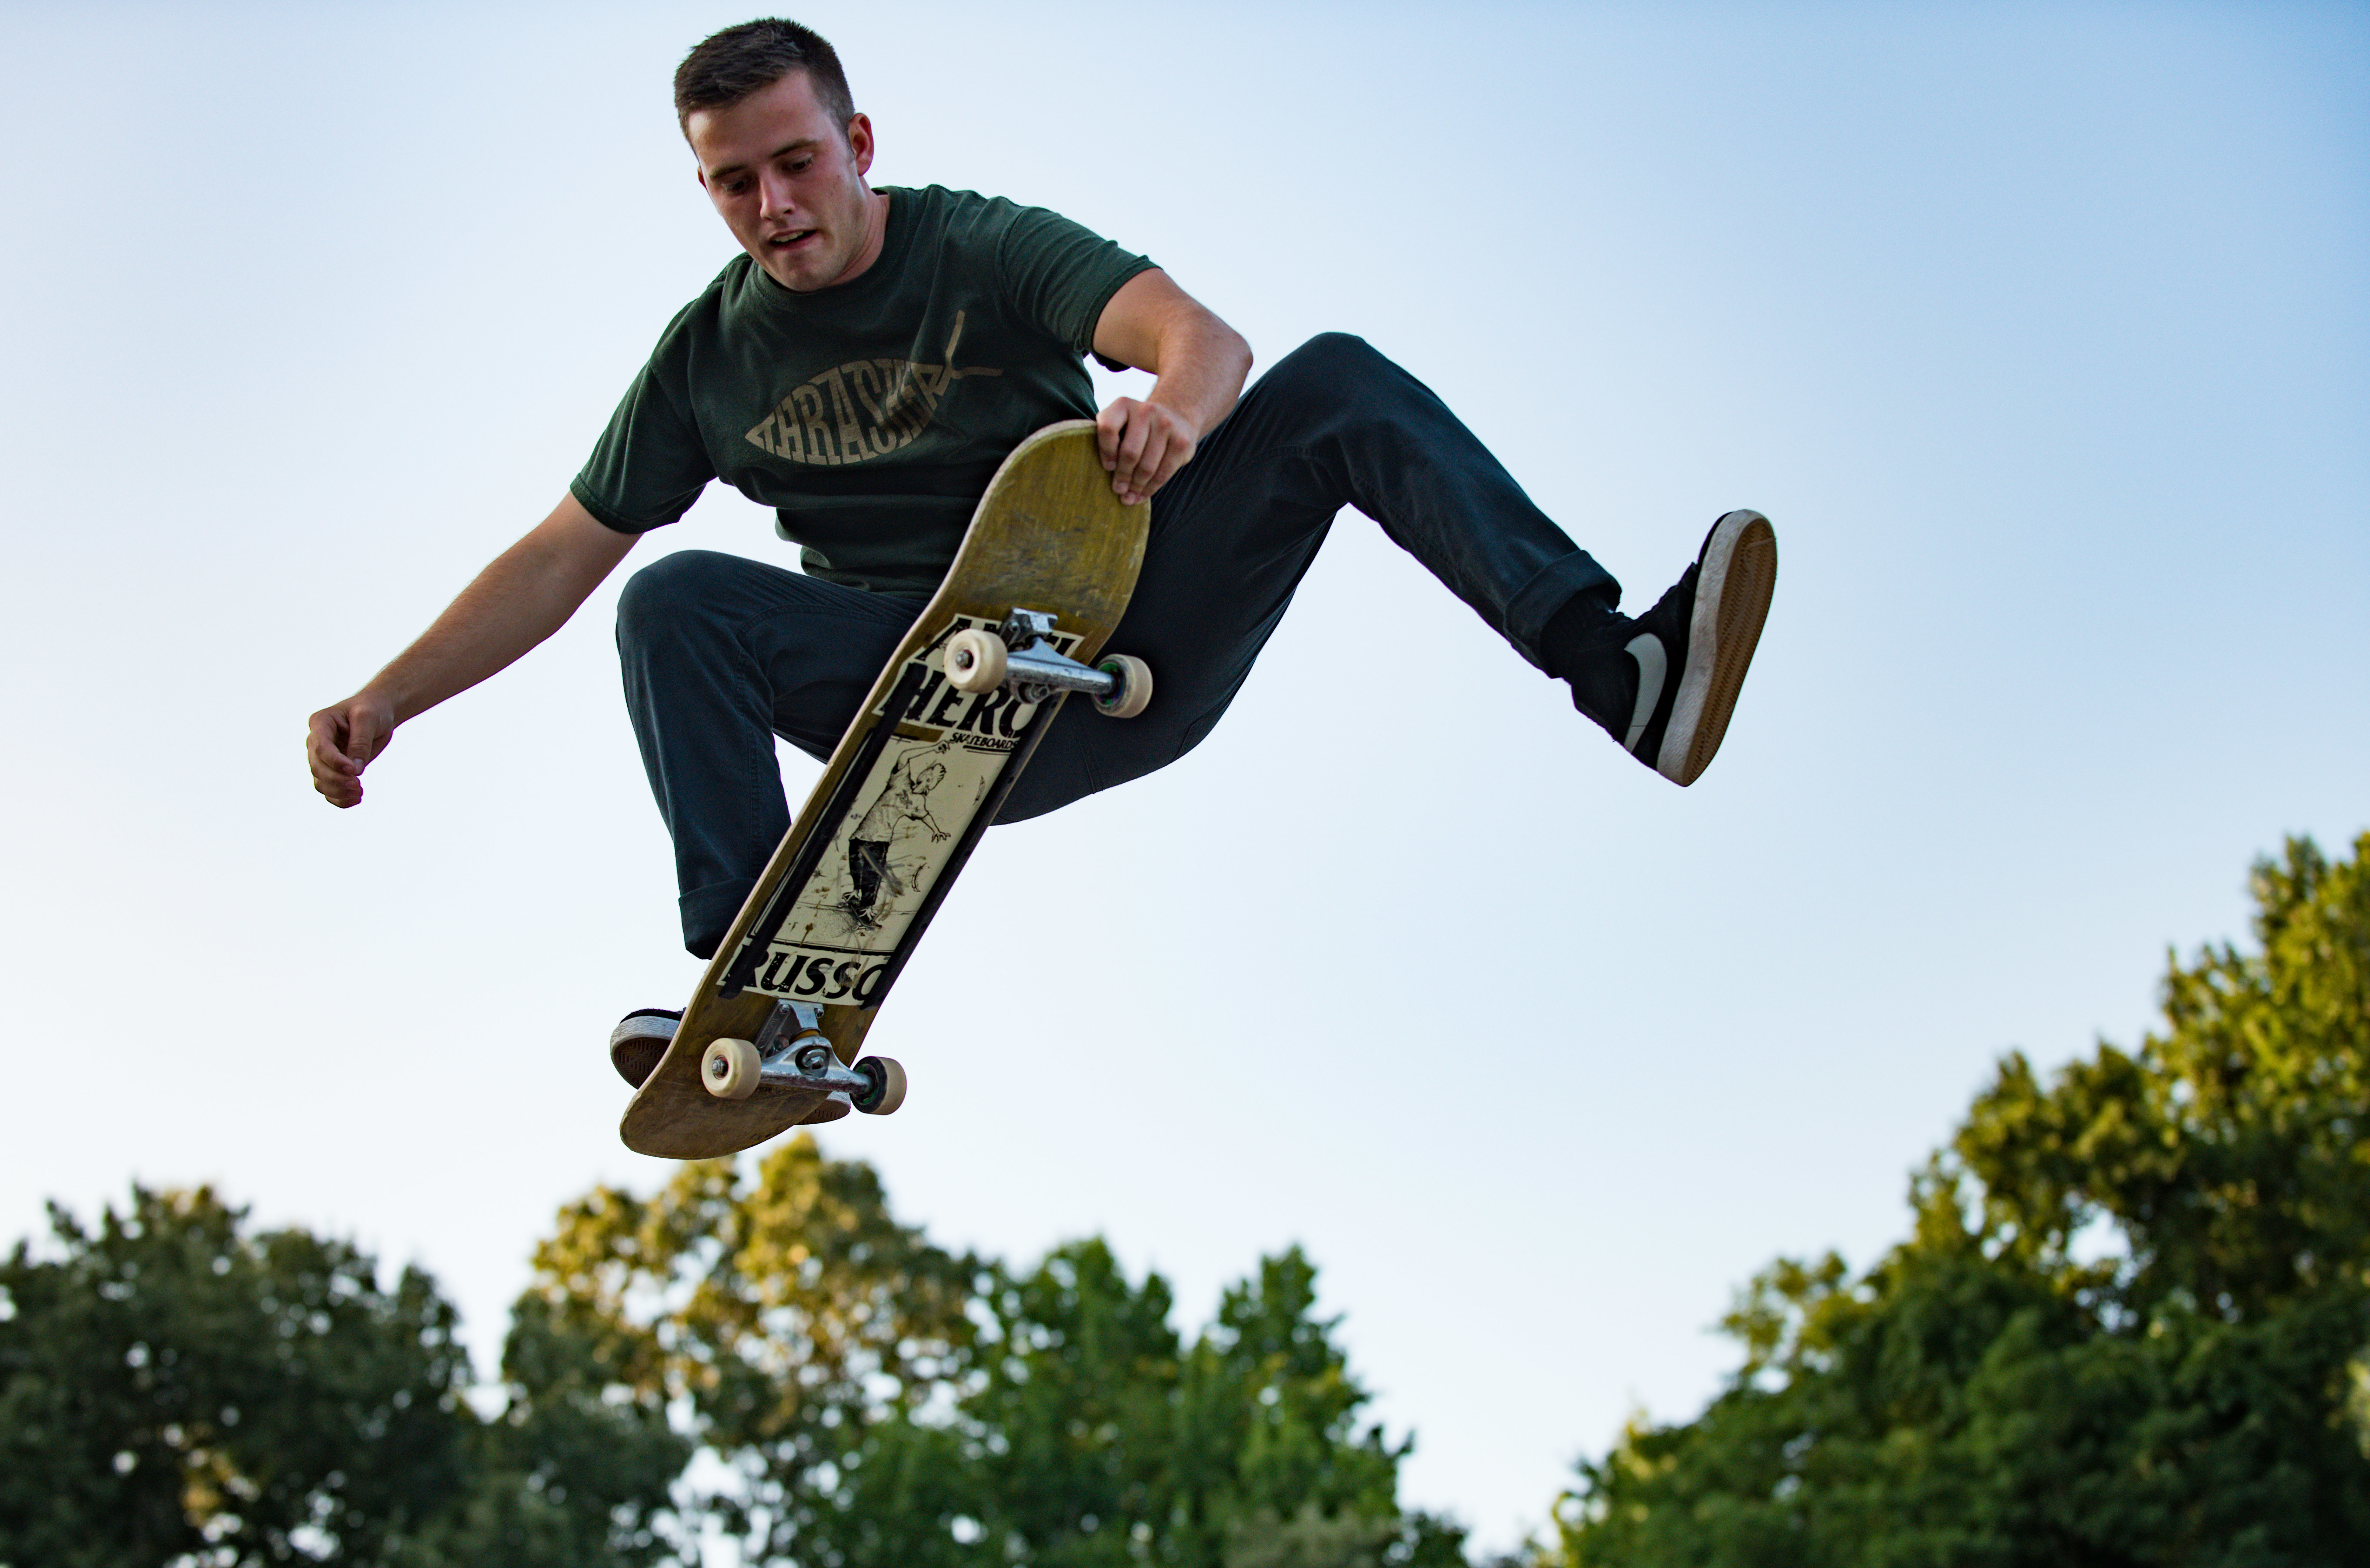 air force 1 skateboard